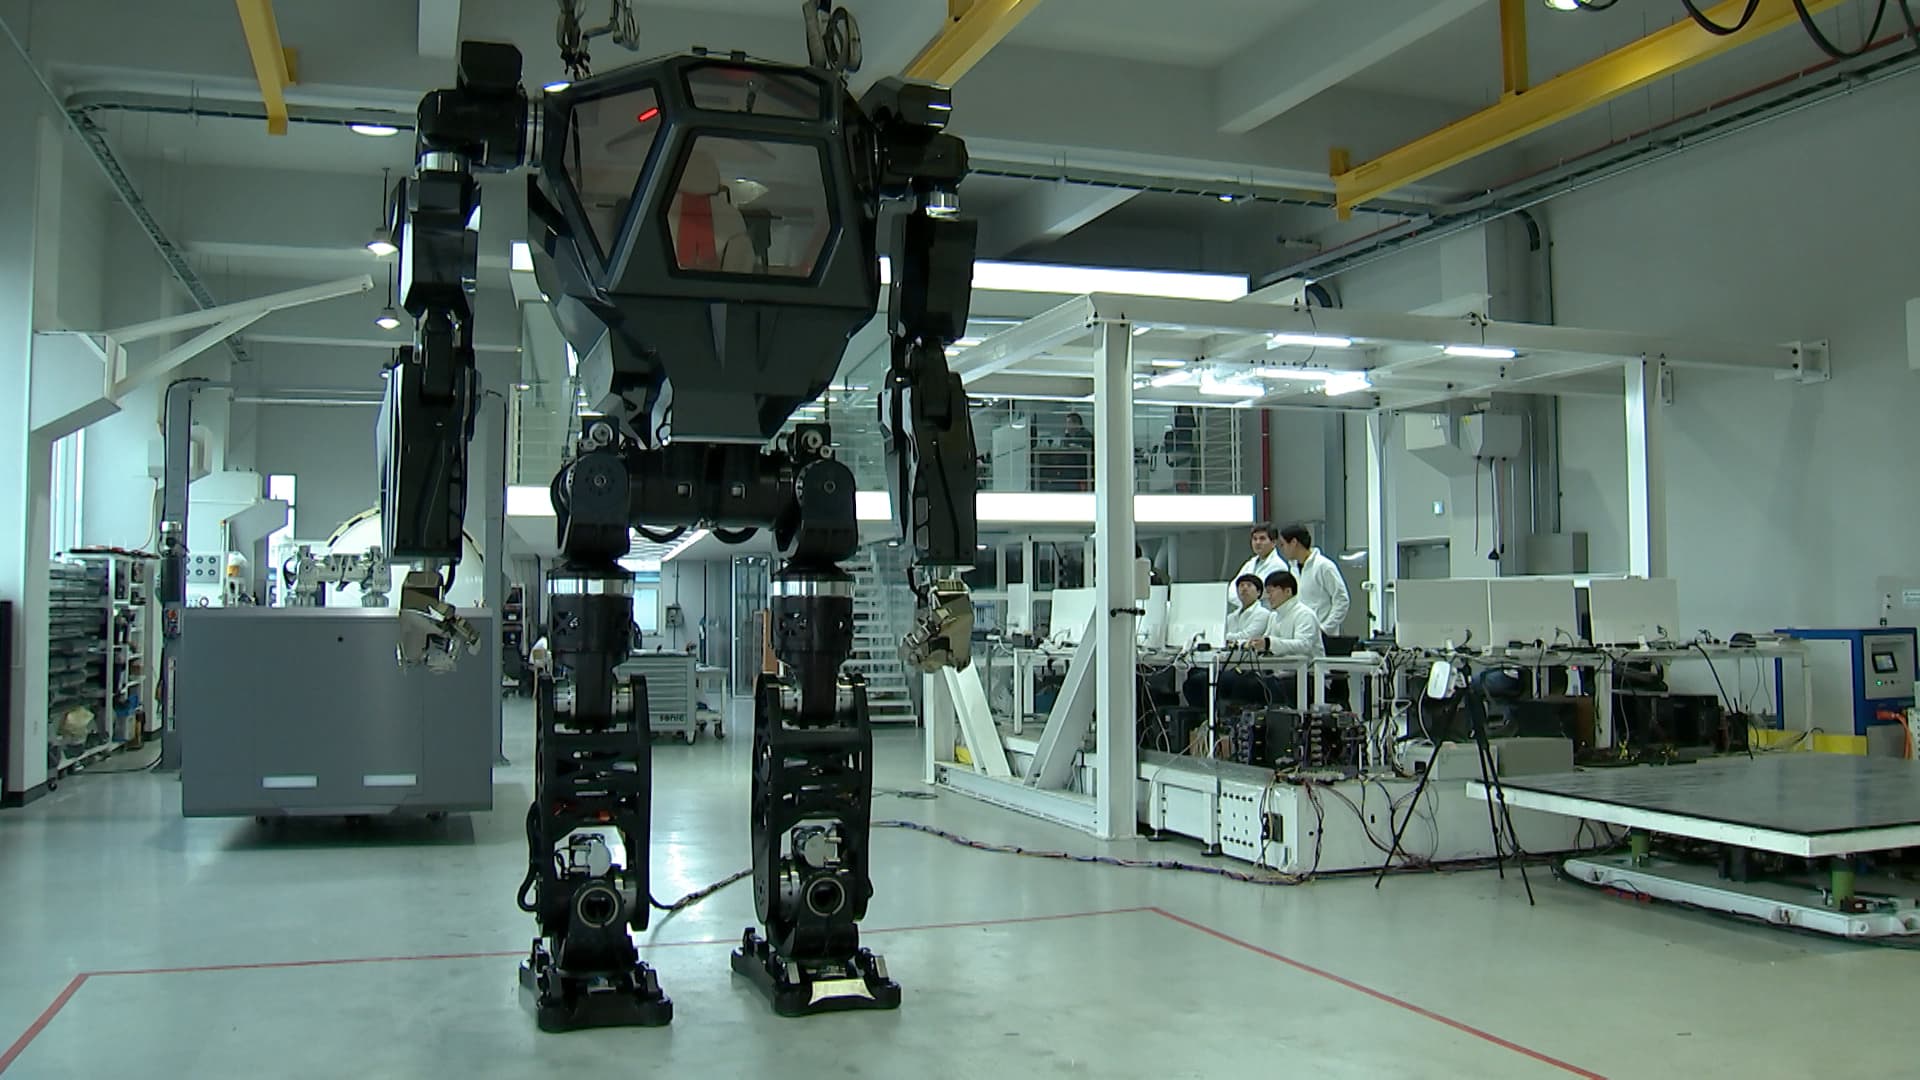 Hankook Mirae's sci-fi looking robot cost $100 million to develop